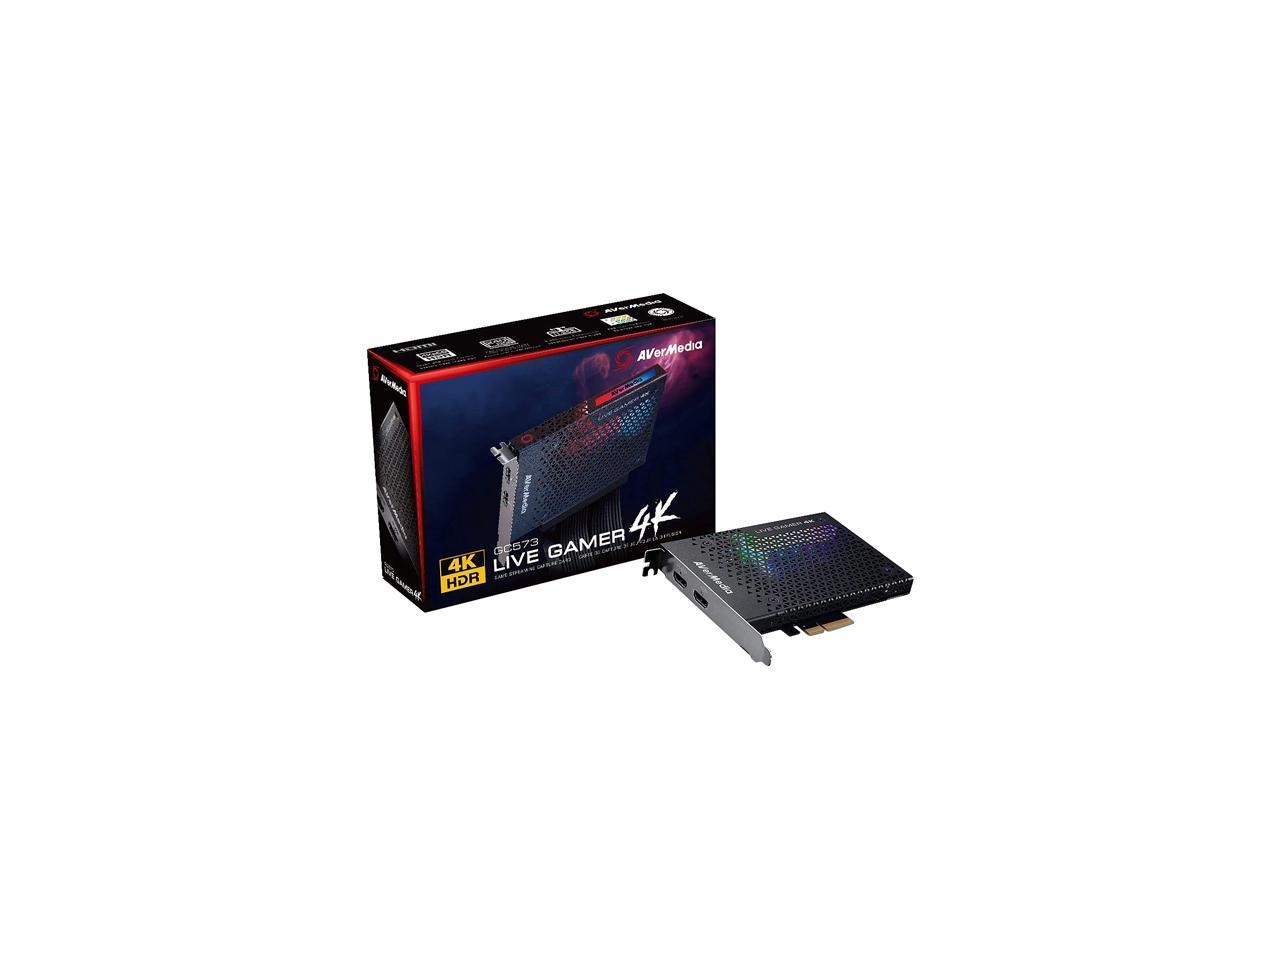 AVerMedia Live Gamer 4K - 4Kp60 HDR Capture Card, Ultra-Low 